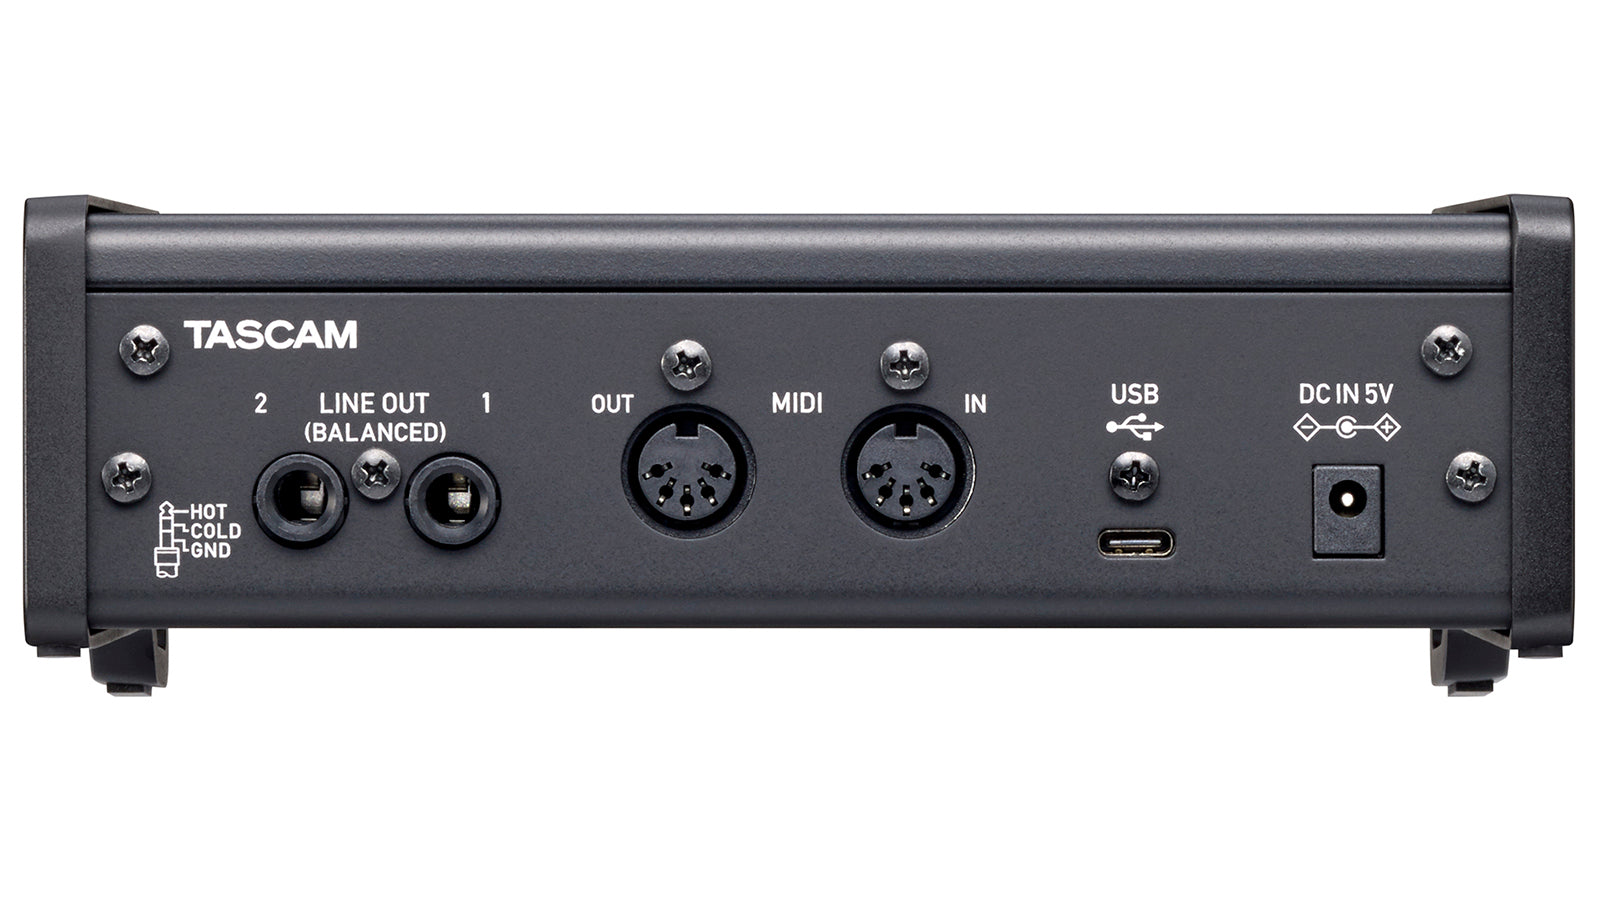 Tascam US-2X2HR USB Audio Interface